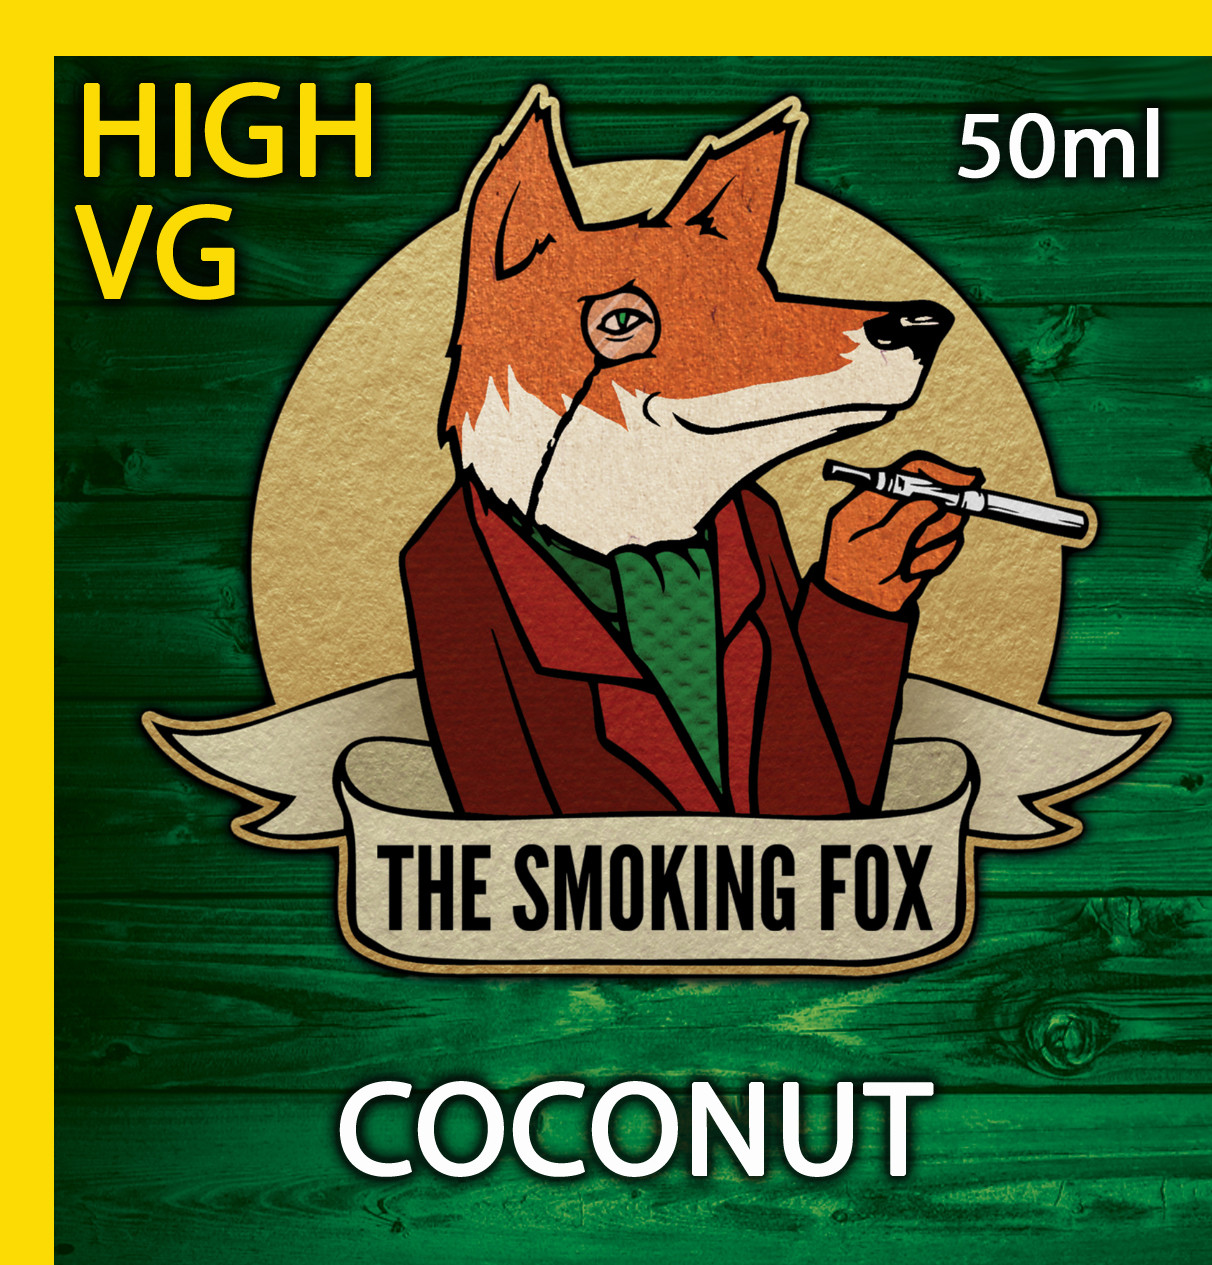 THE SMOKING FOX 50ml HIGH VG - COCONUT